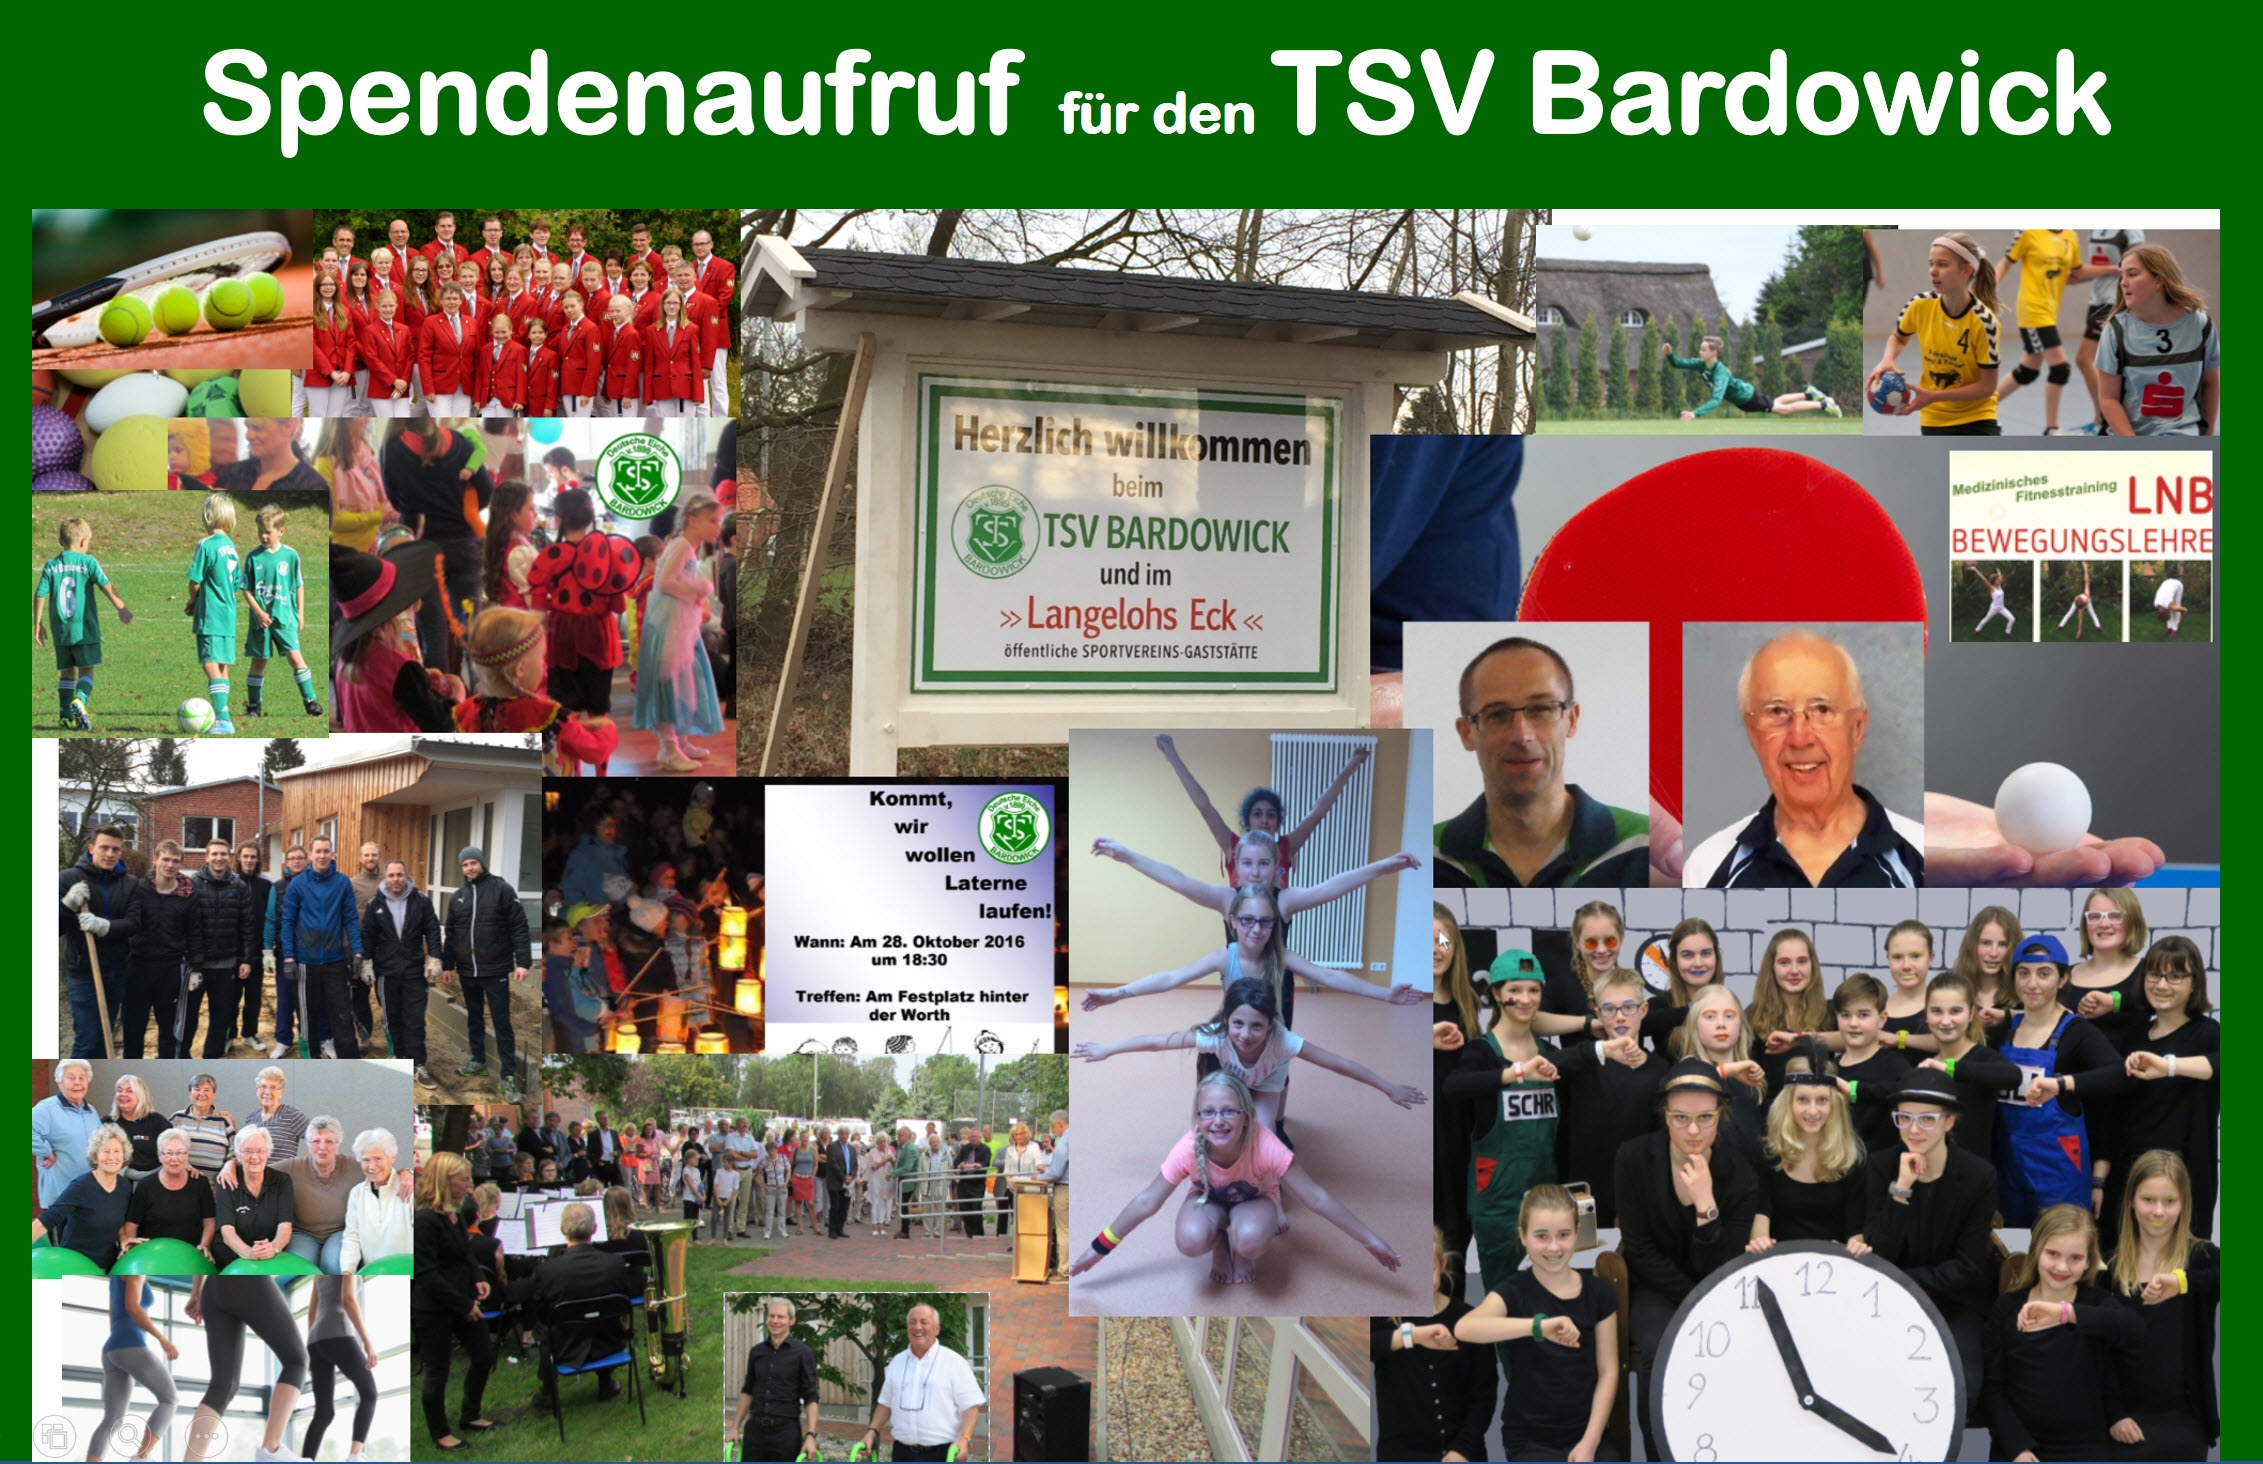 Spendenaufruf für den TSV Bardowick